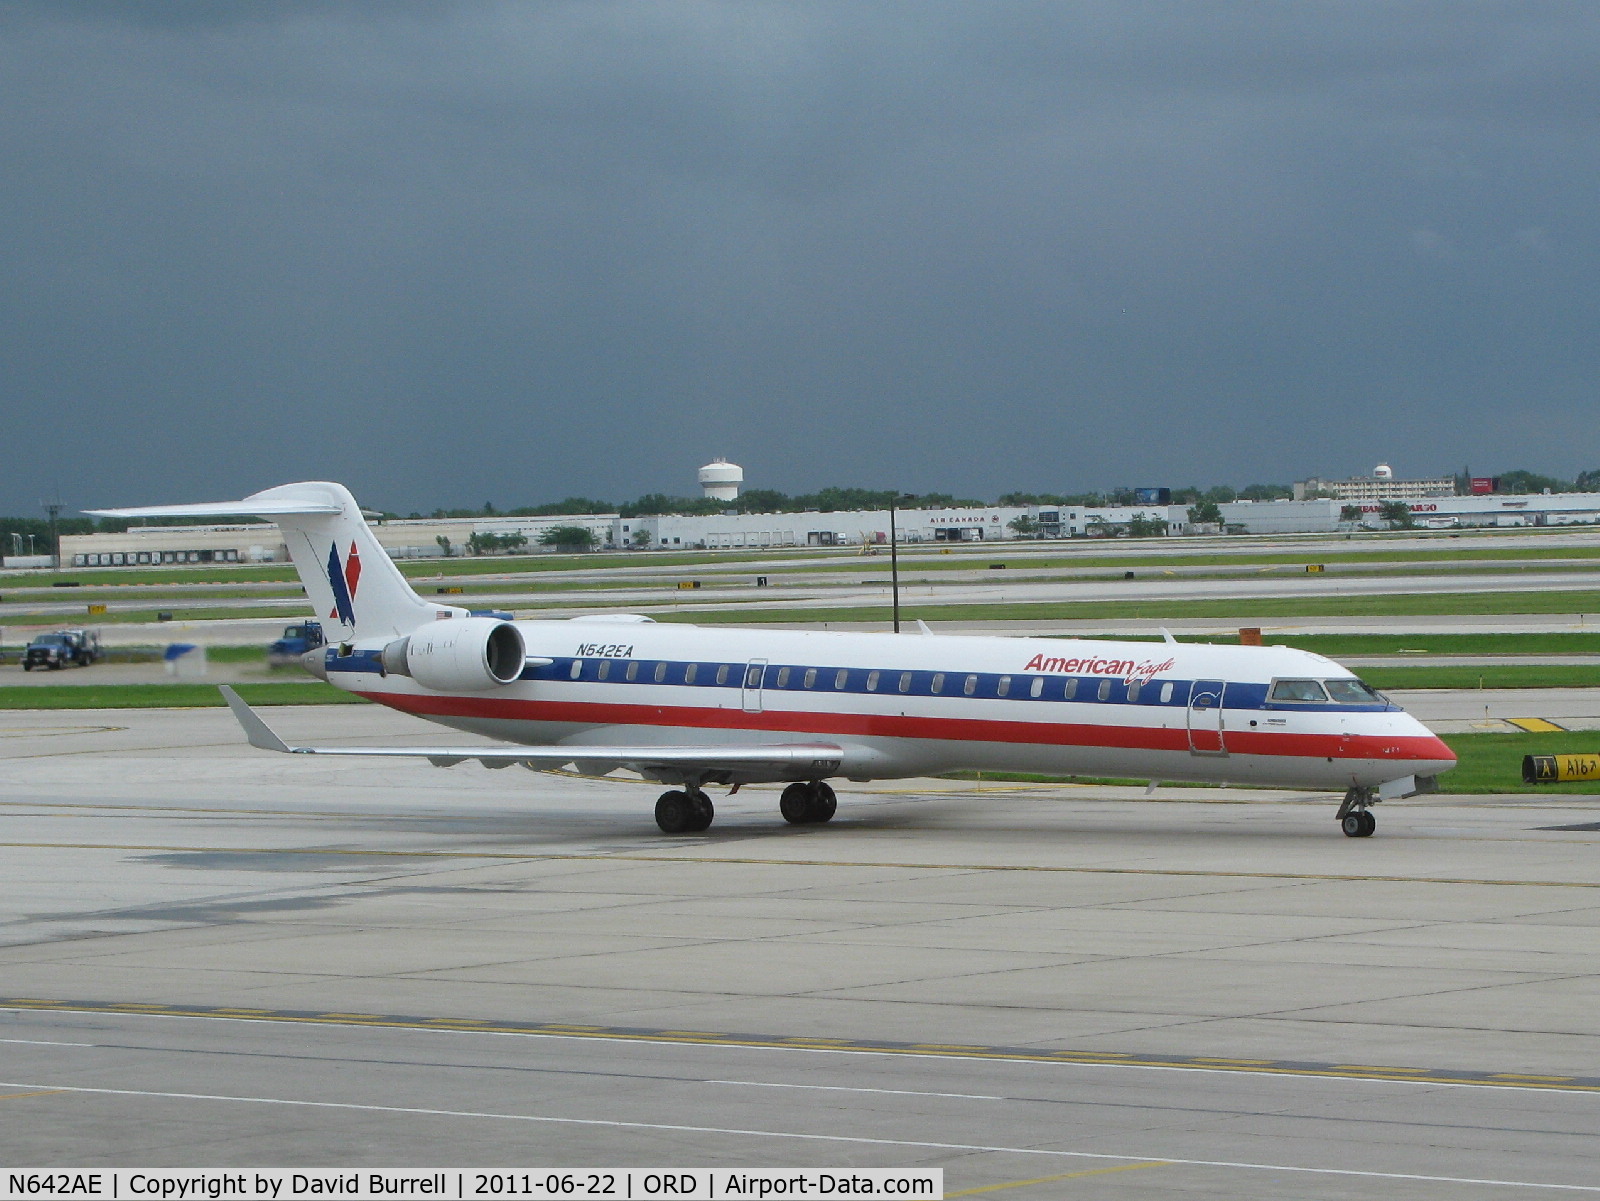 N642AE, 1999 Embraer ERJ-145LR (EMB-145LR) C/N 145193, American Eagle Embraer EMB-145LR taxiing at Chicago O'hare Airport